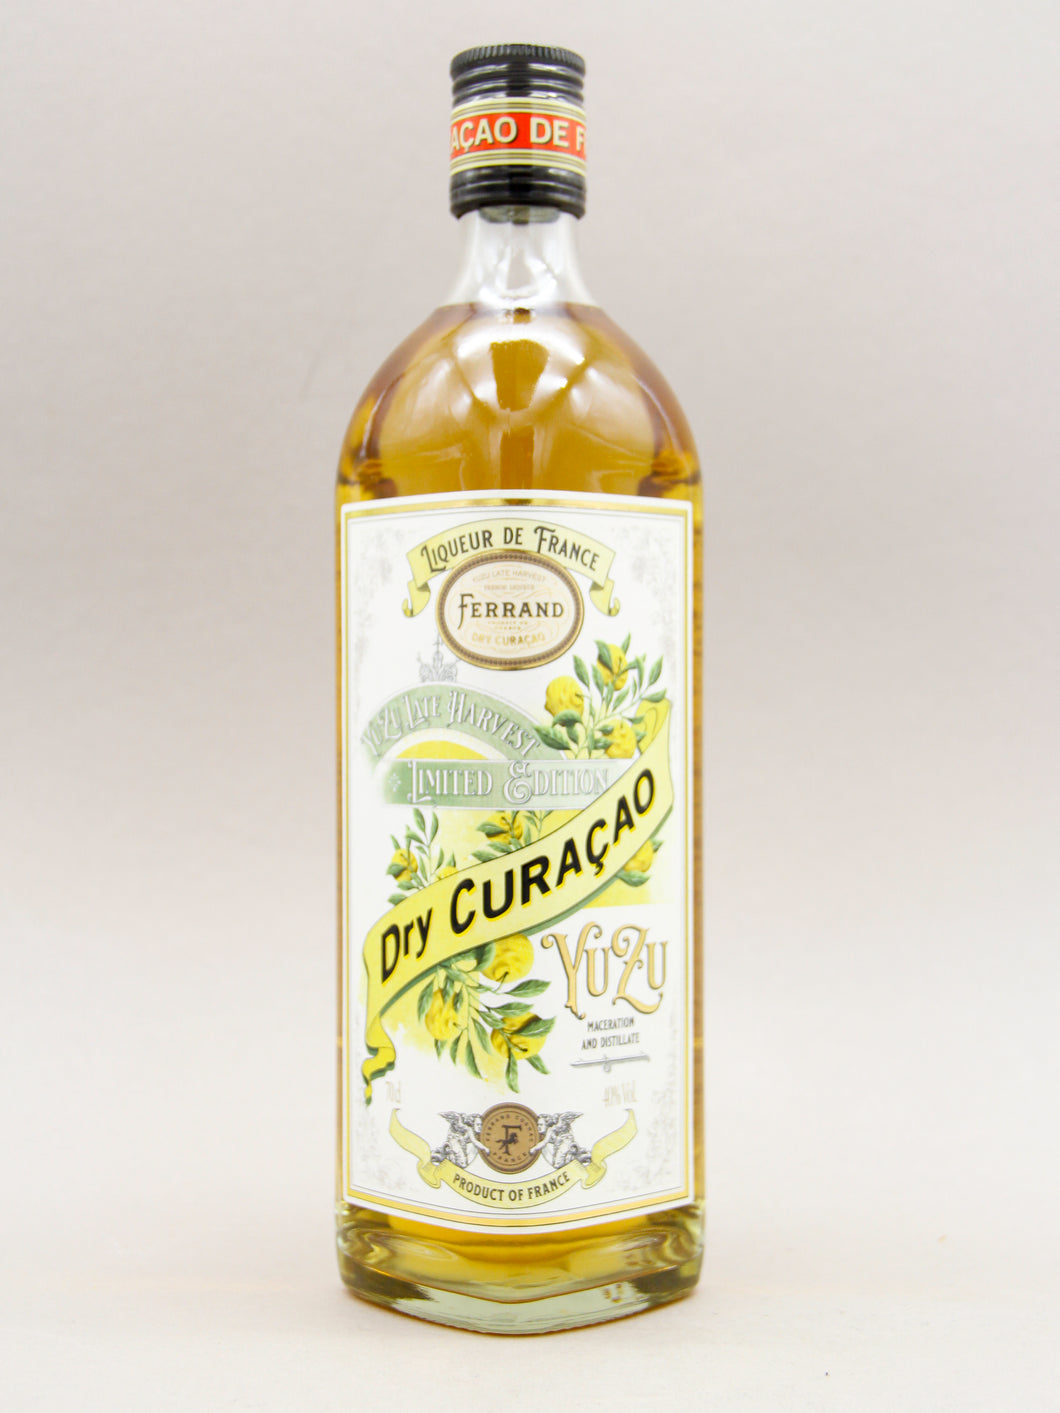 Ferrand Dry Curacao Yuzu Late Harvest, Limited Edition (40%, 70cl)